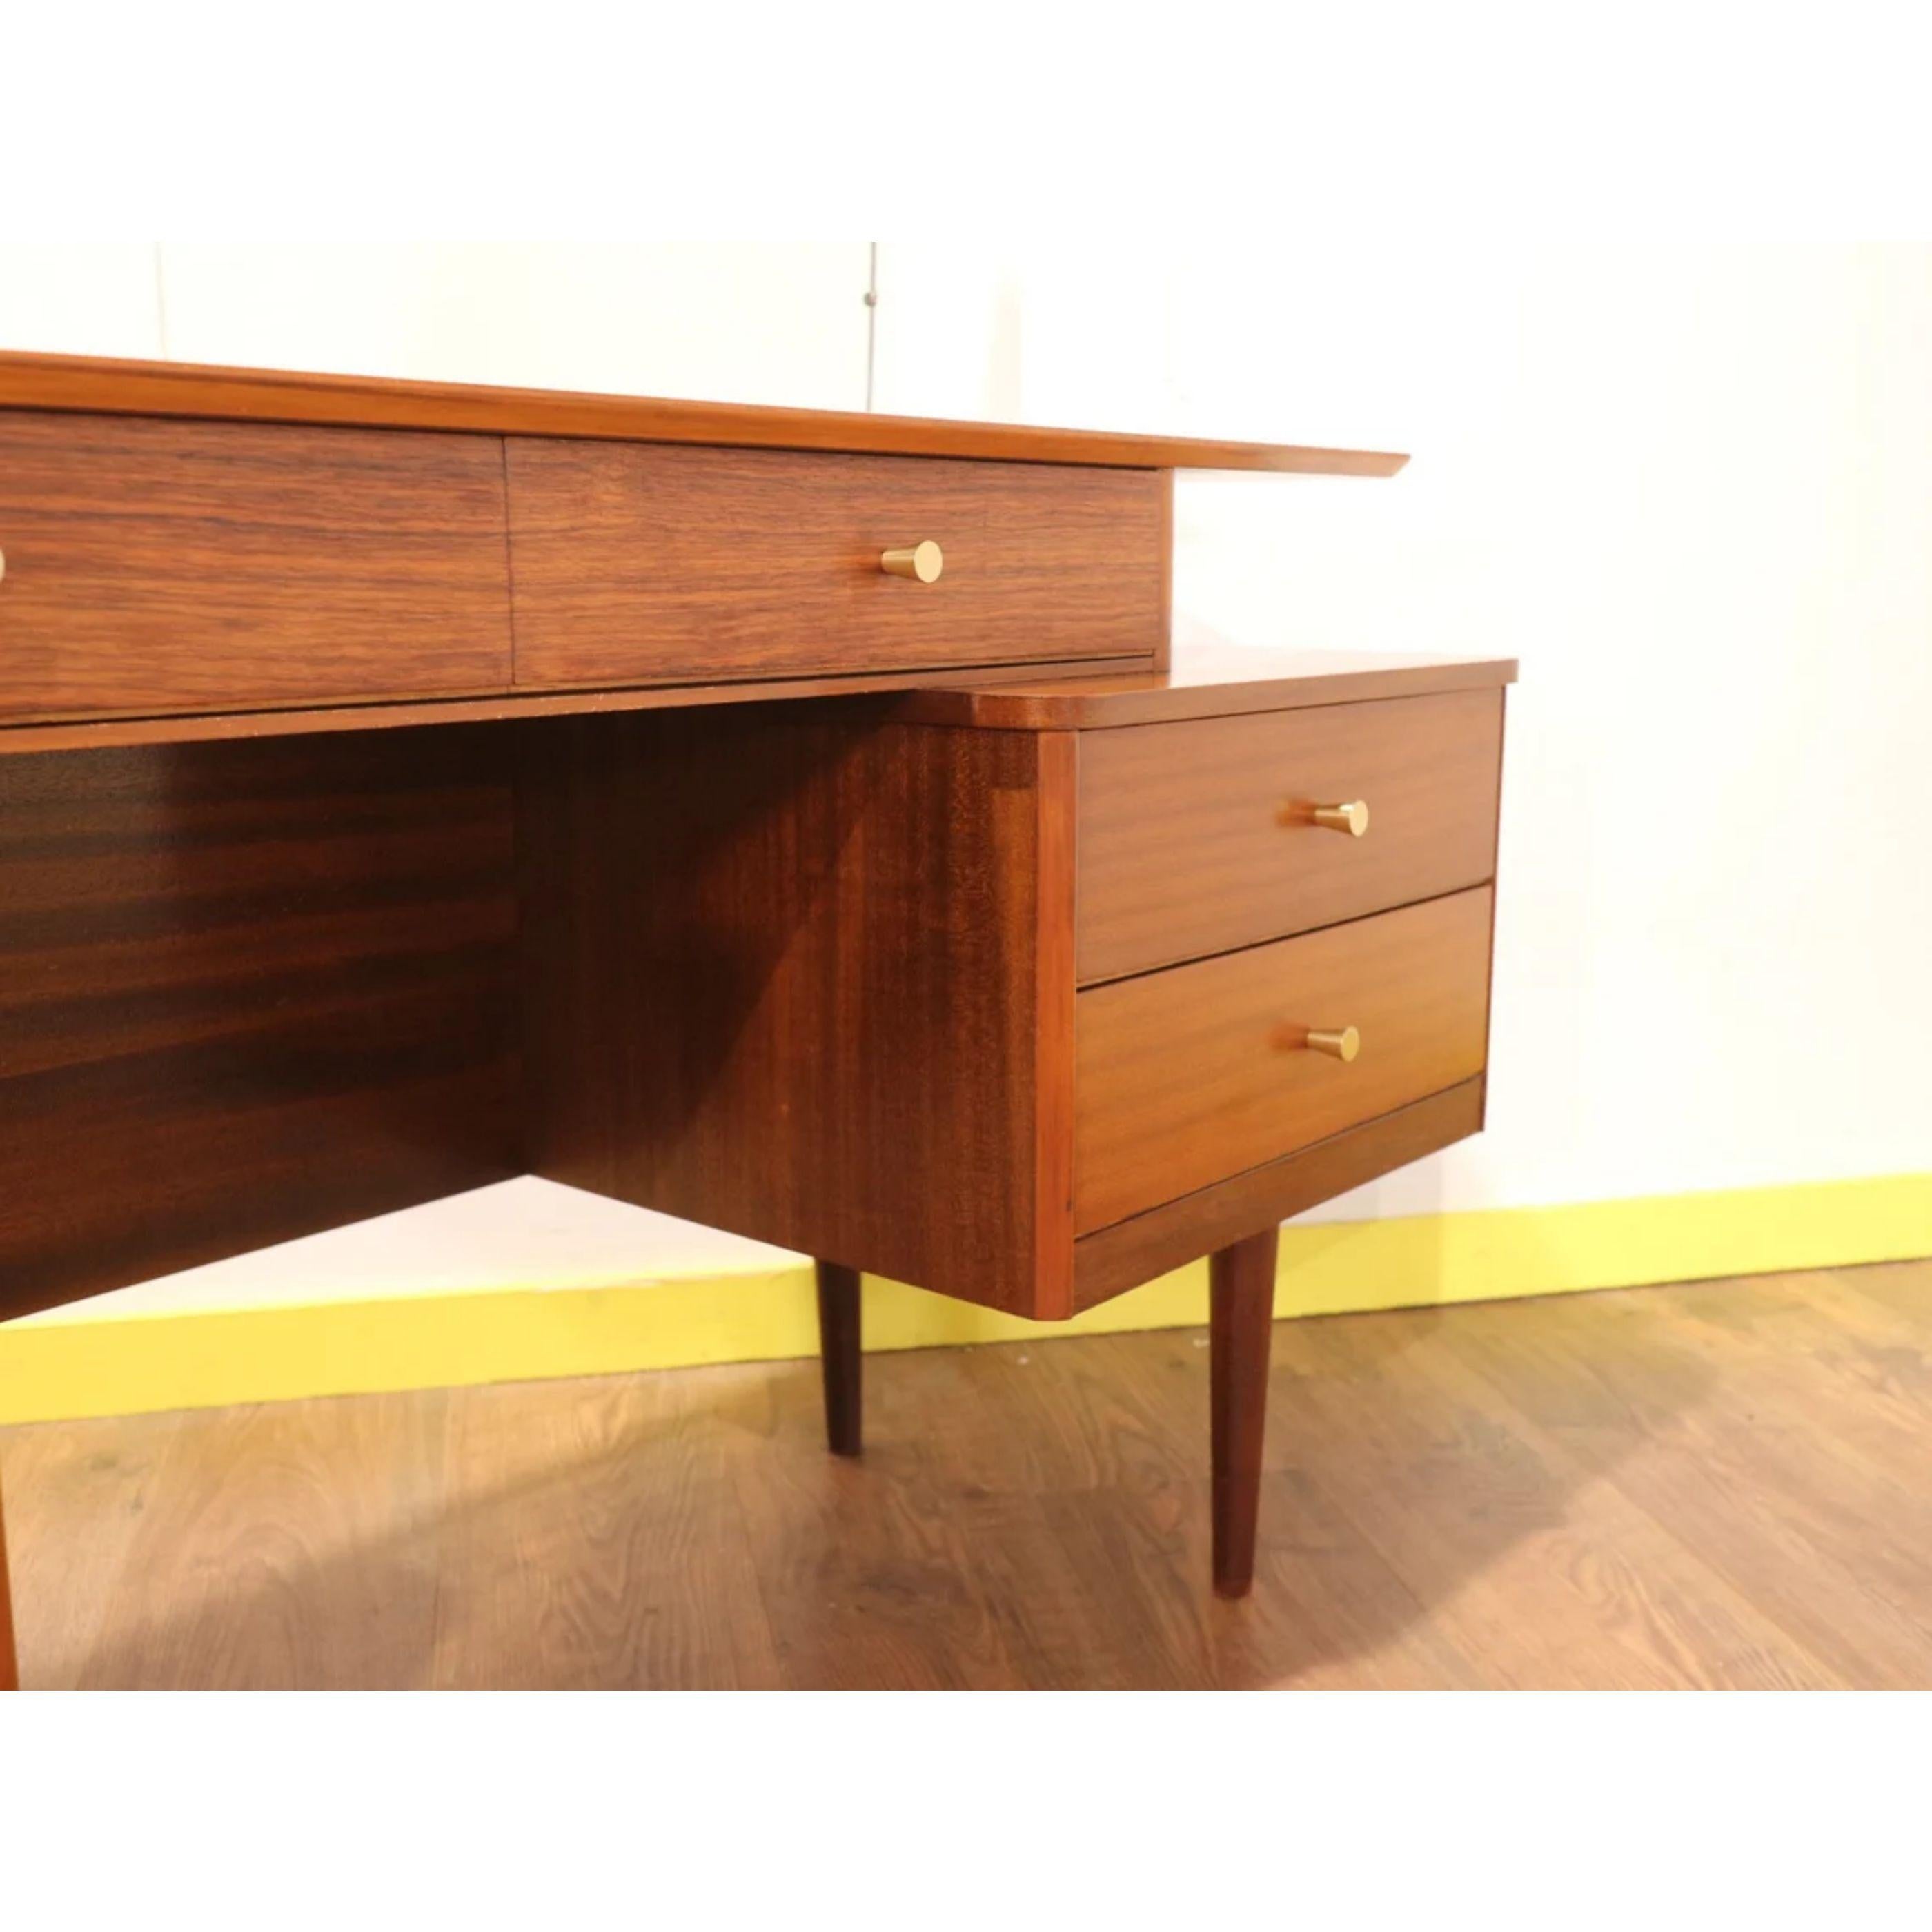 20th Century Mid-Century Modern Vintage Teak Vanity Desk by Ausitinsuite Danish G Plan Style